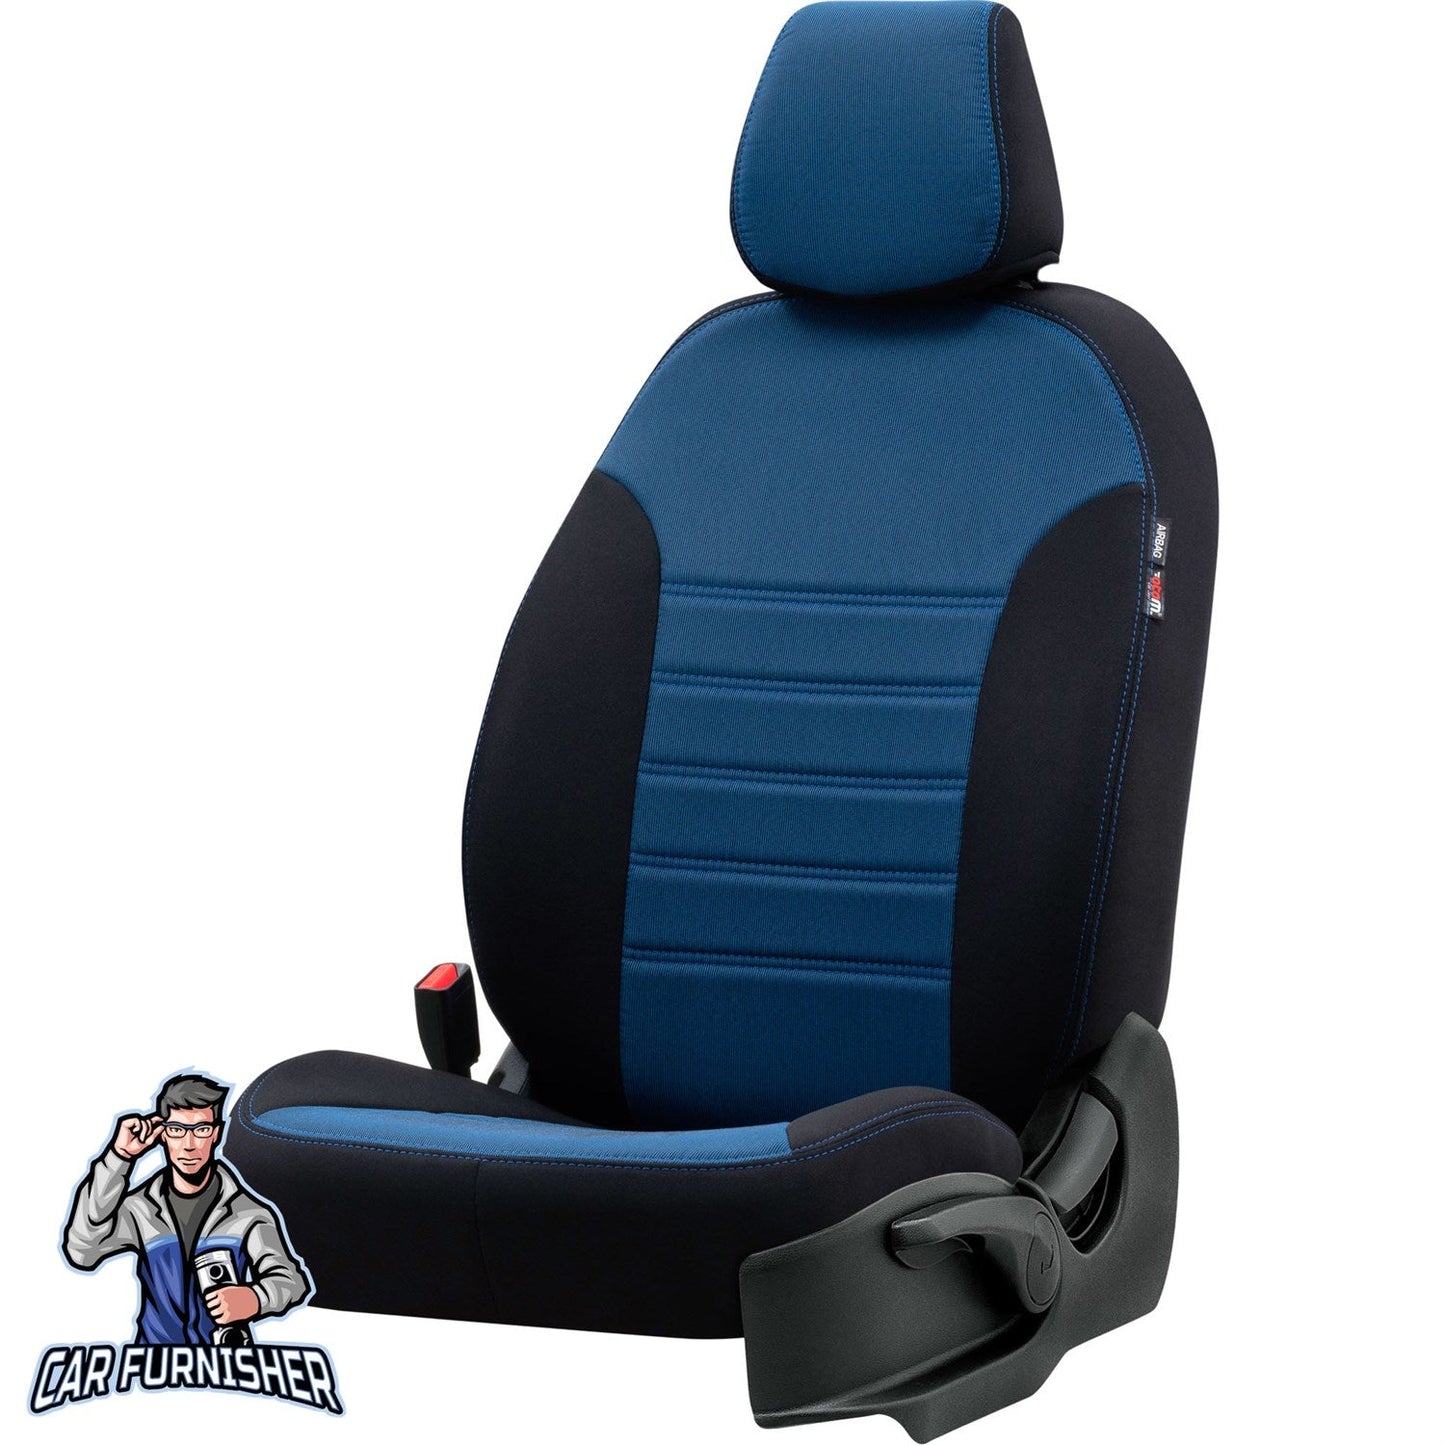 Volkswagen Tiguan Seat Cover Original Jacquard Design Blue Jacquard Fabric